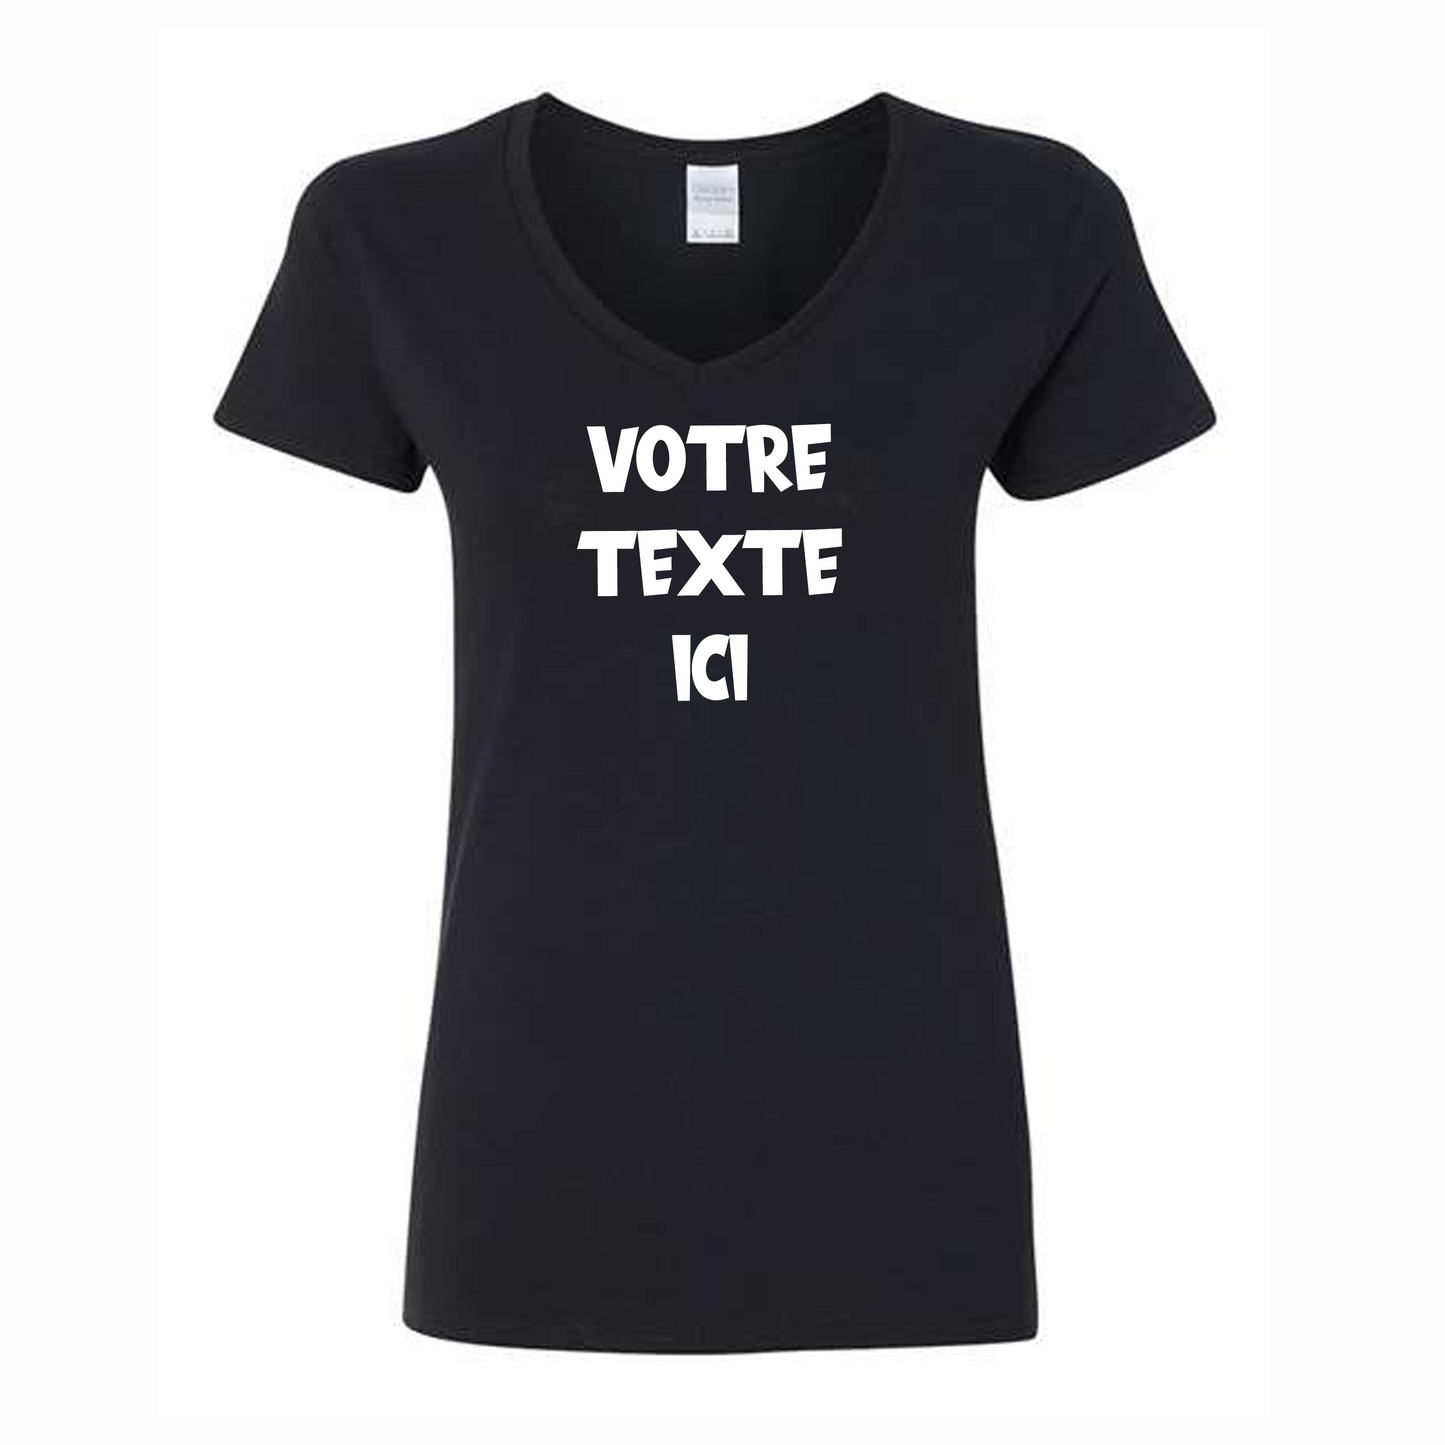 Tshirt / T-shirt - FEMME - Col en V - TEXTE/DESSIN au choix